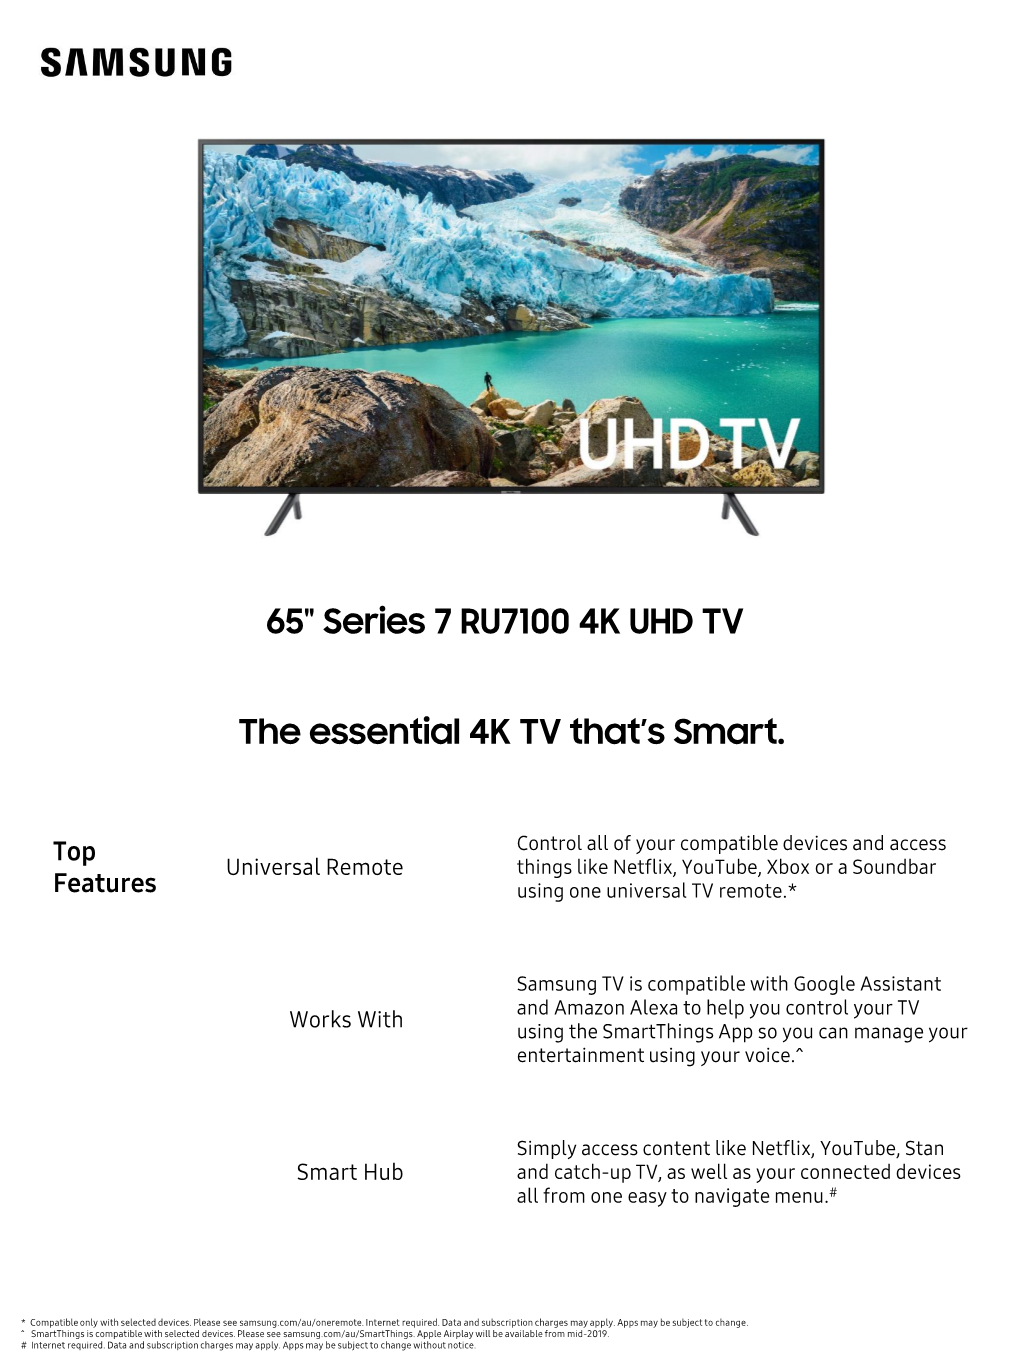 65" Series 7 RU7100 4K UHD TV the Essential 4K TV That's Smart